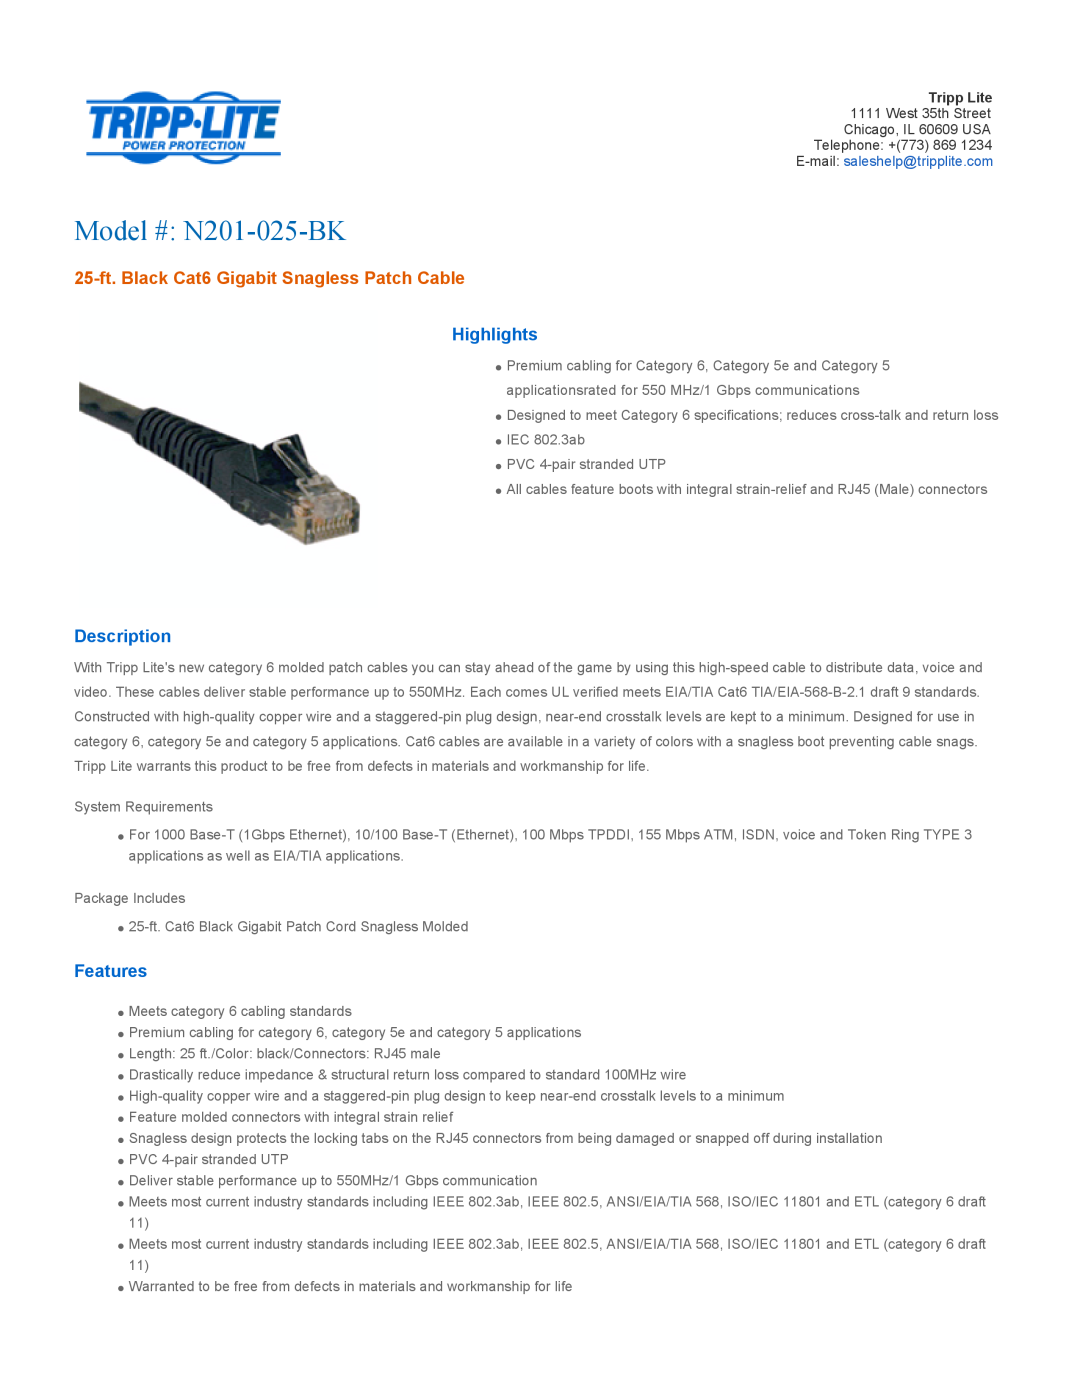 Tripp Lite specifications Highlights, Description, Features, Model # N201-025-BK 